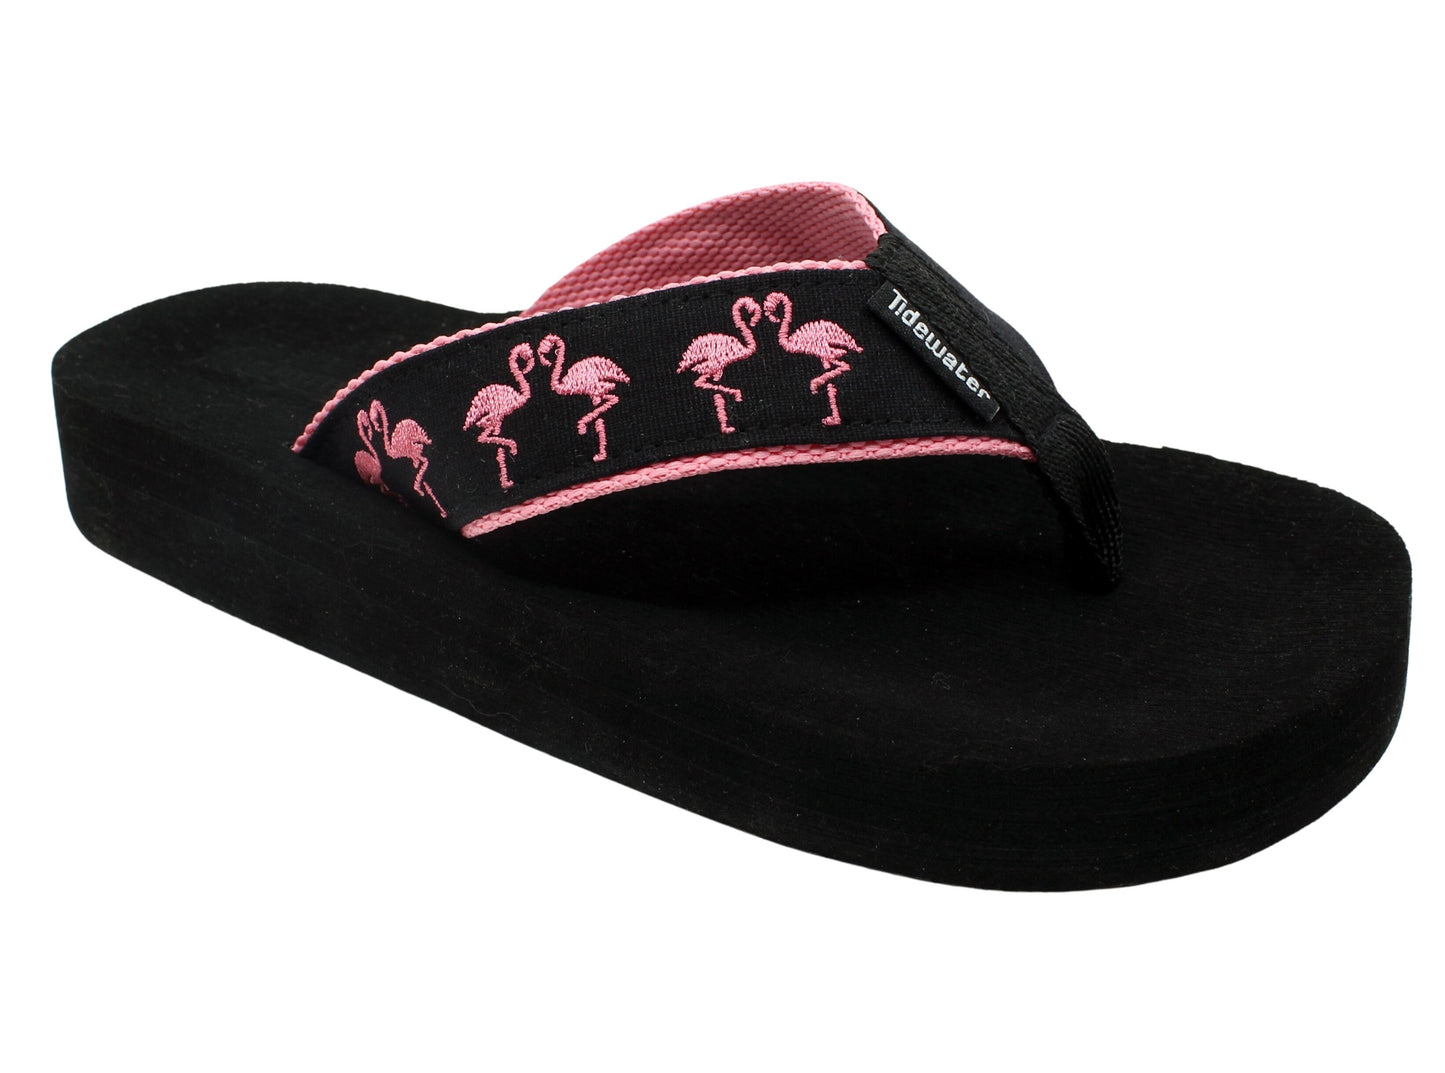 *Tidewater Flip-Flops - Pink Flamingo